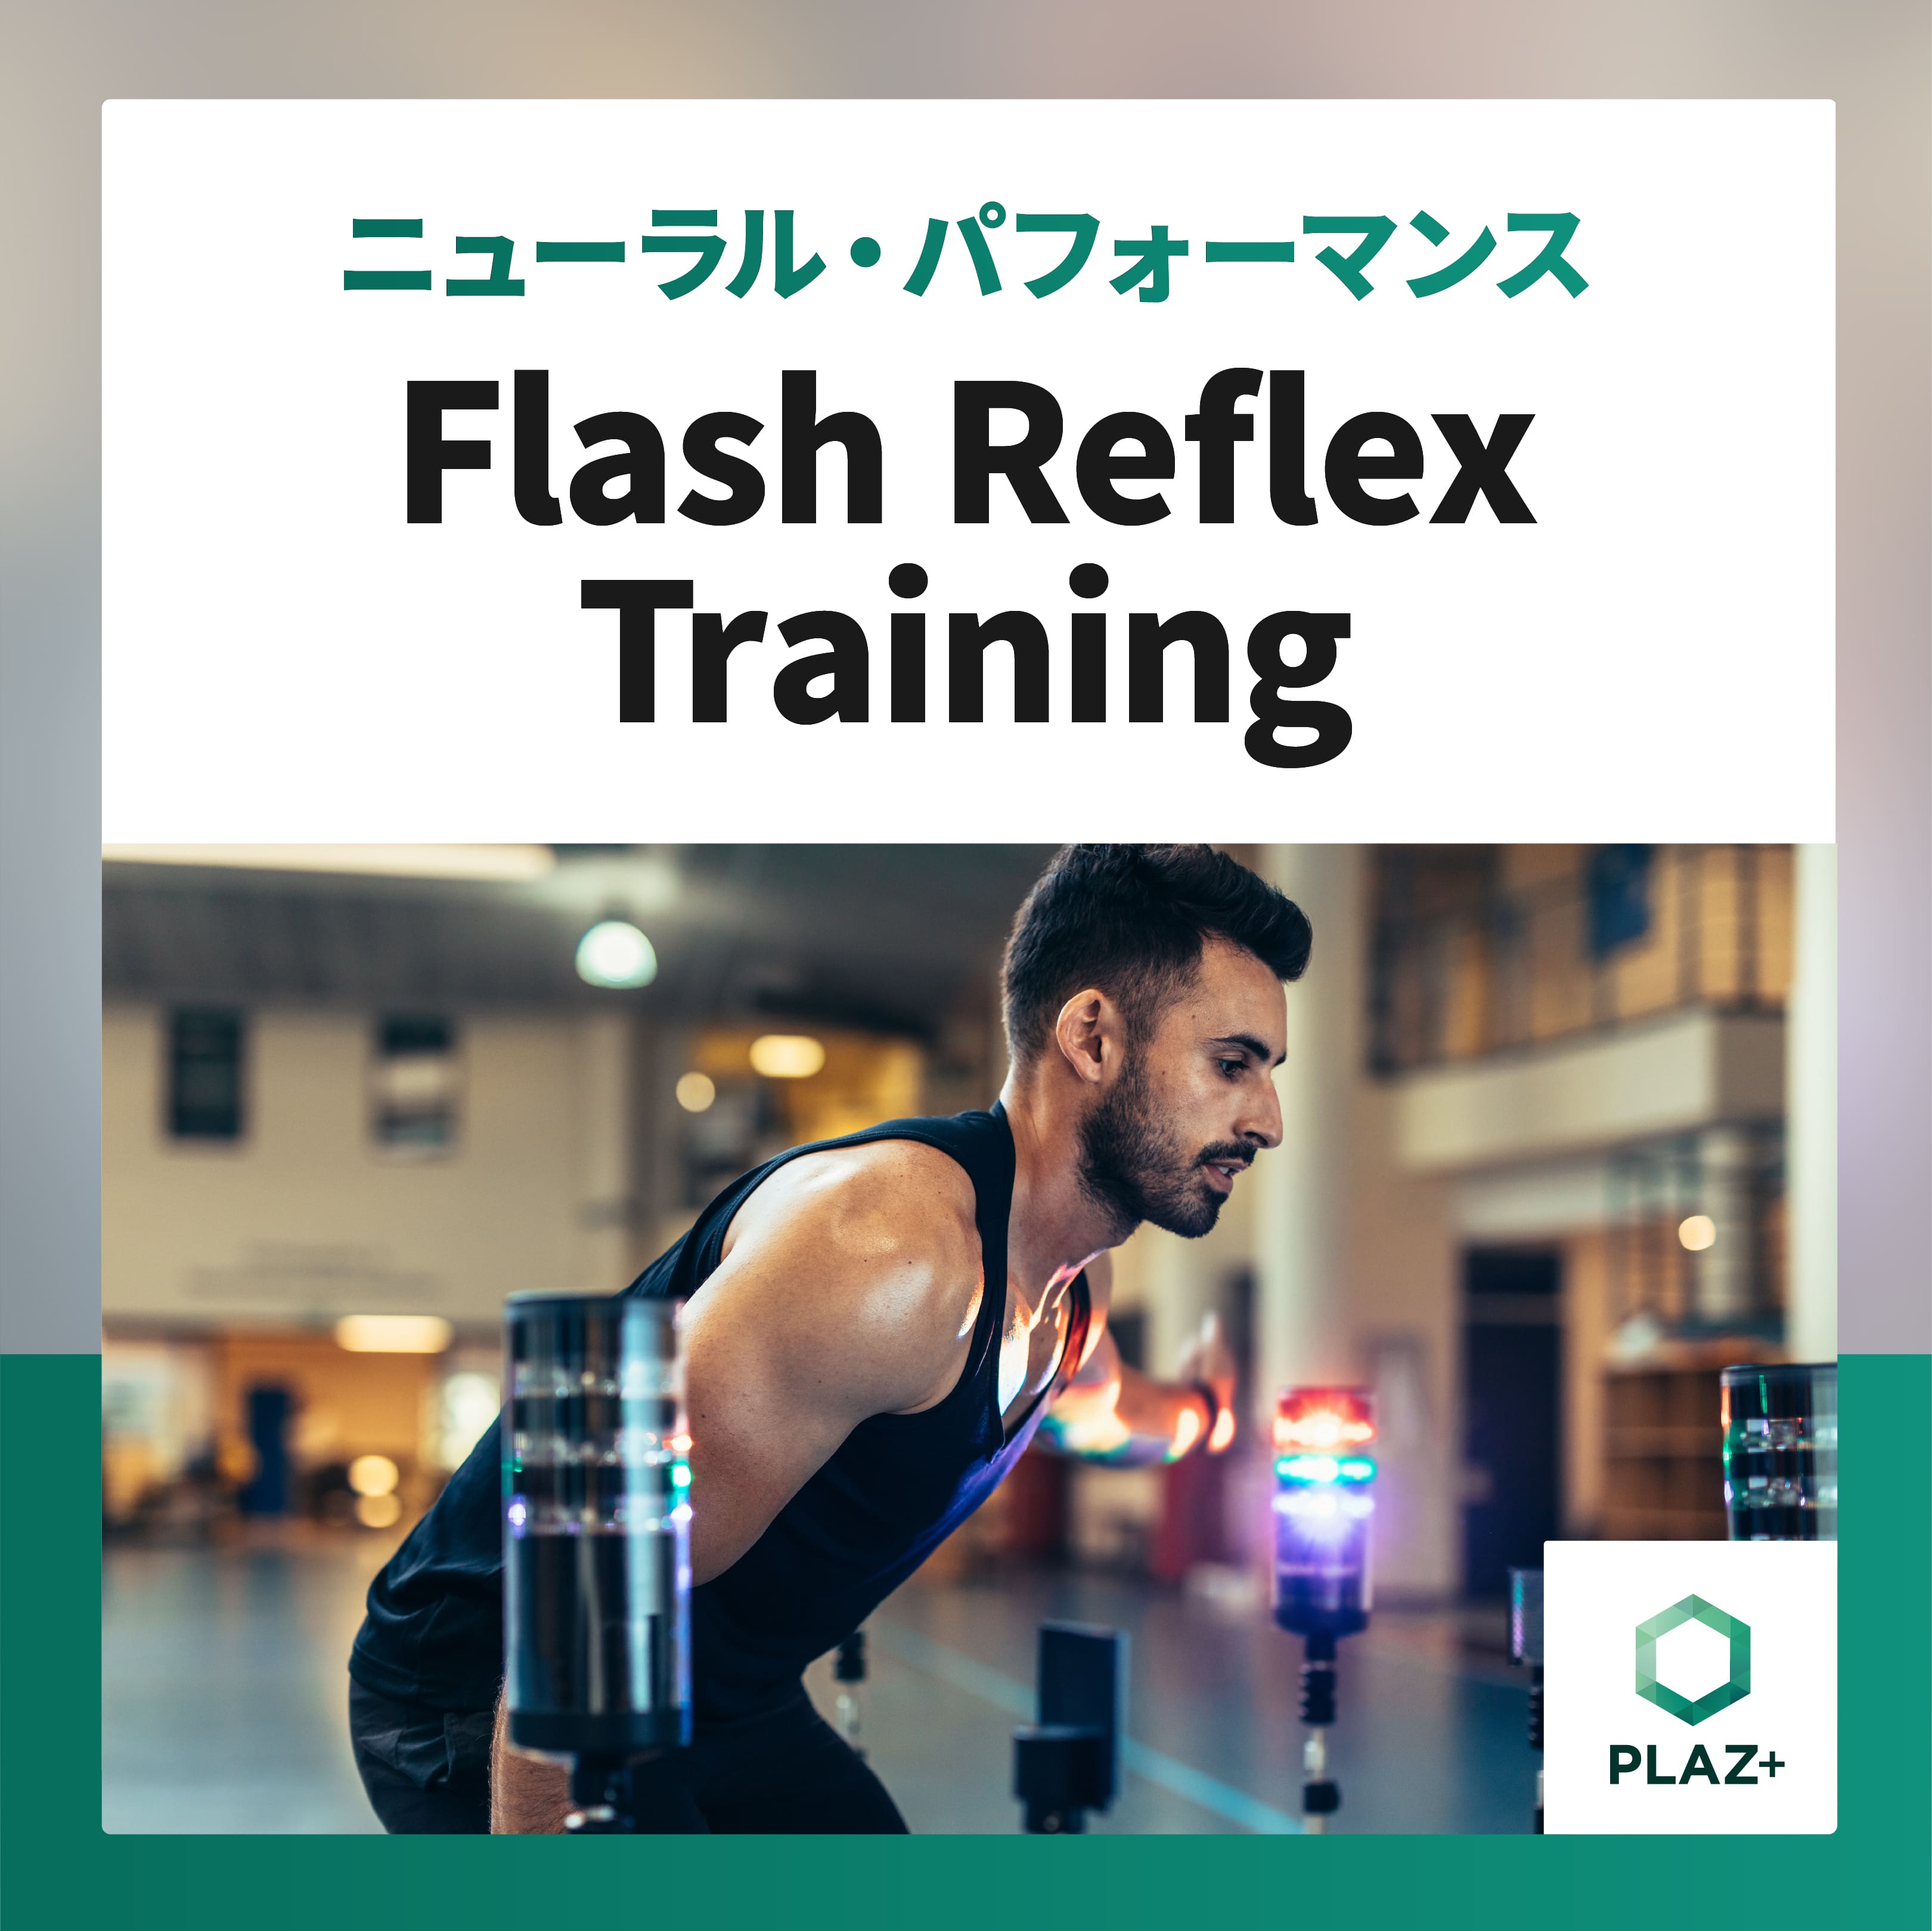 Flash Reflex Training